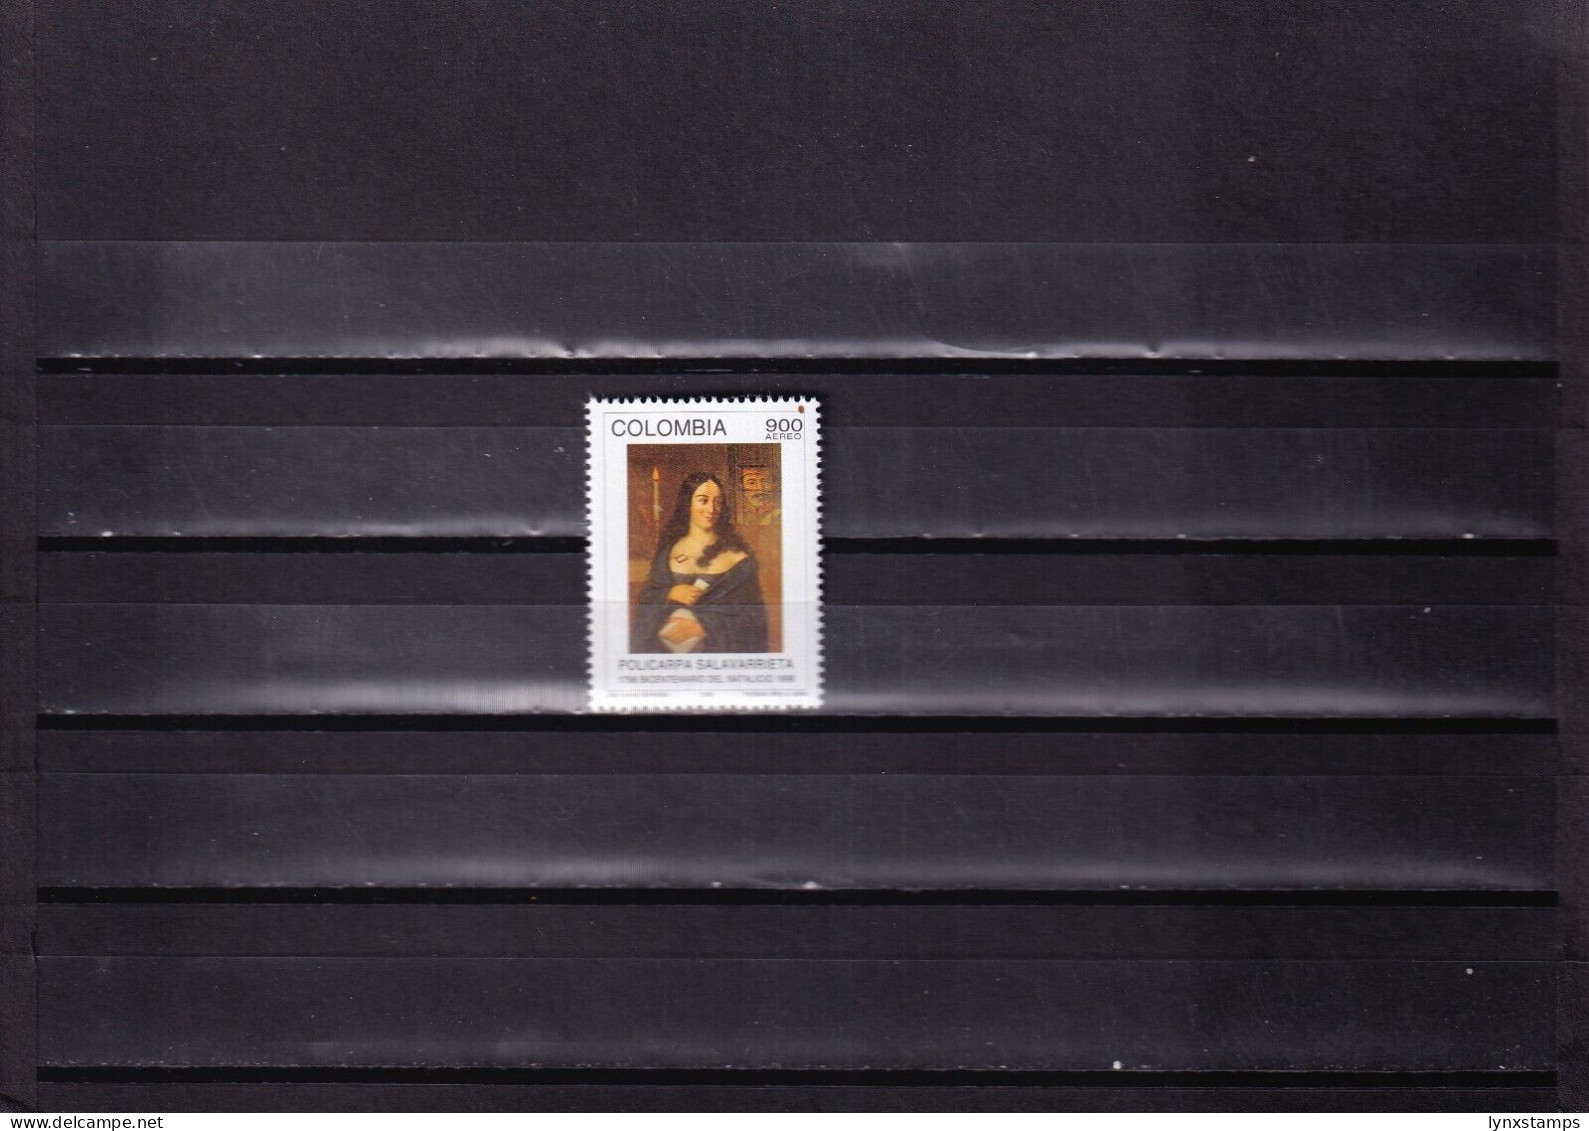 ER03 Colombia 1996 Policarpa Salavarrieta MNH Stamp - Colombia